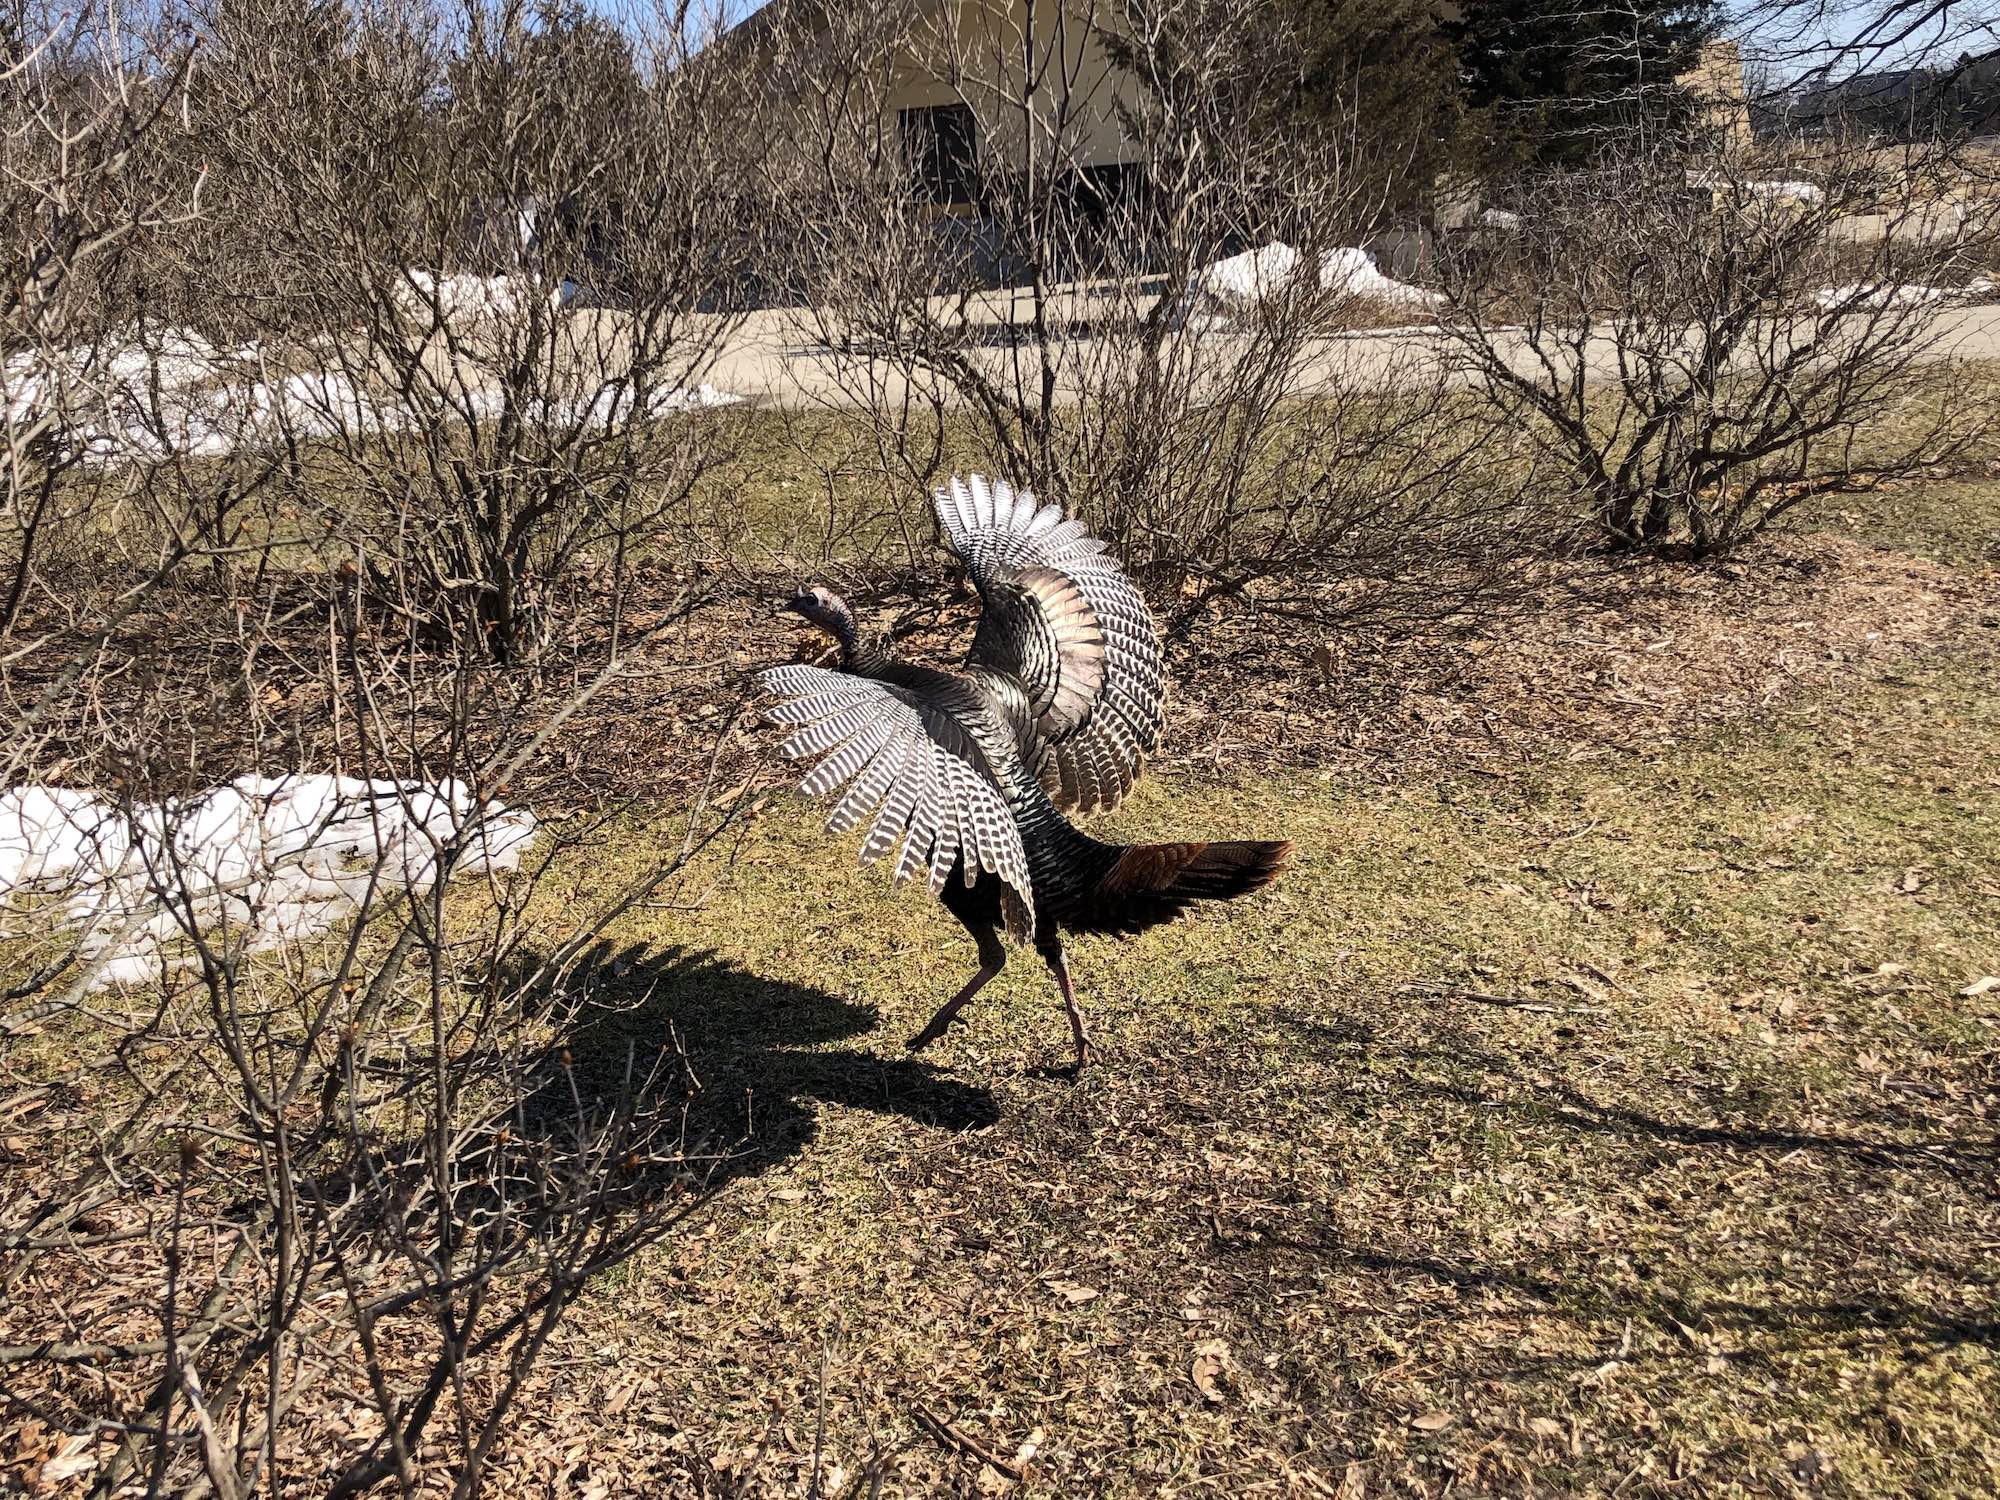 Wild turkey in Longenecker Gardens at the University of Wisconsin Arboretum on March 17, 2019.